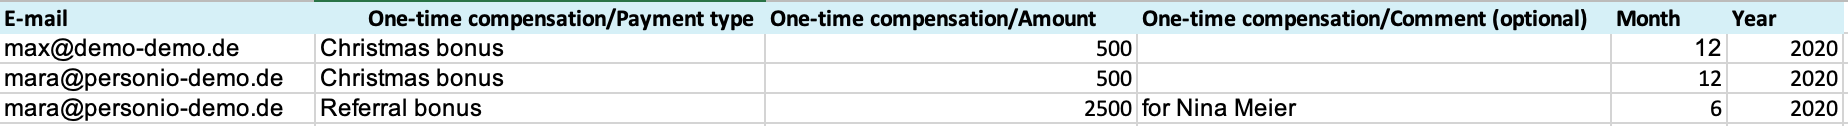 salaries-one-time-compensation-import_en-us.png